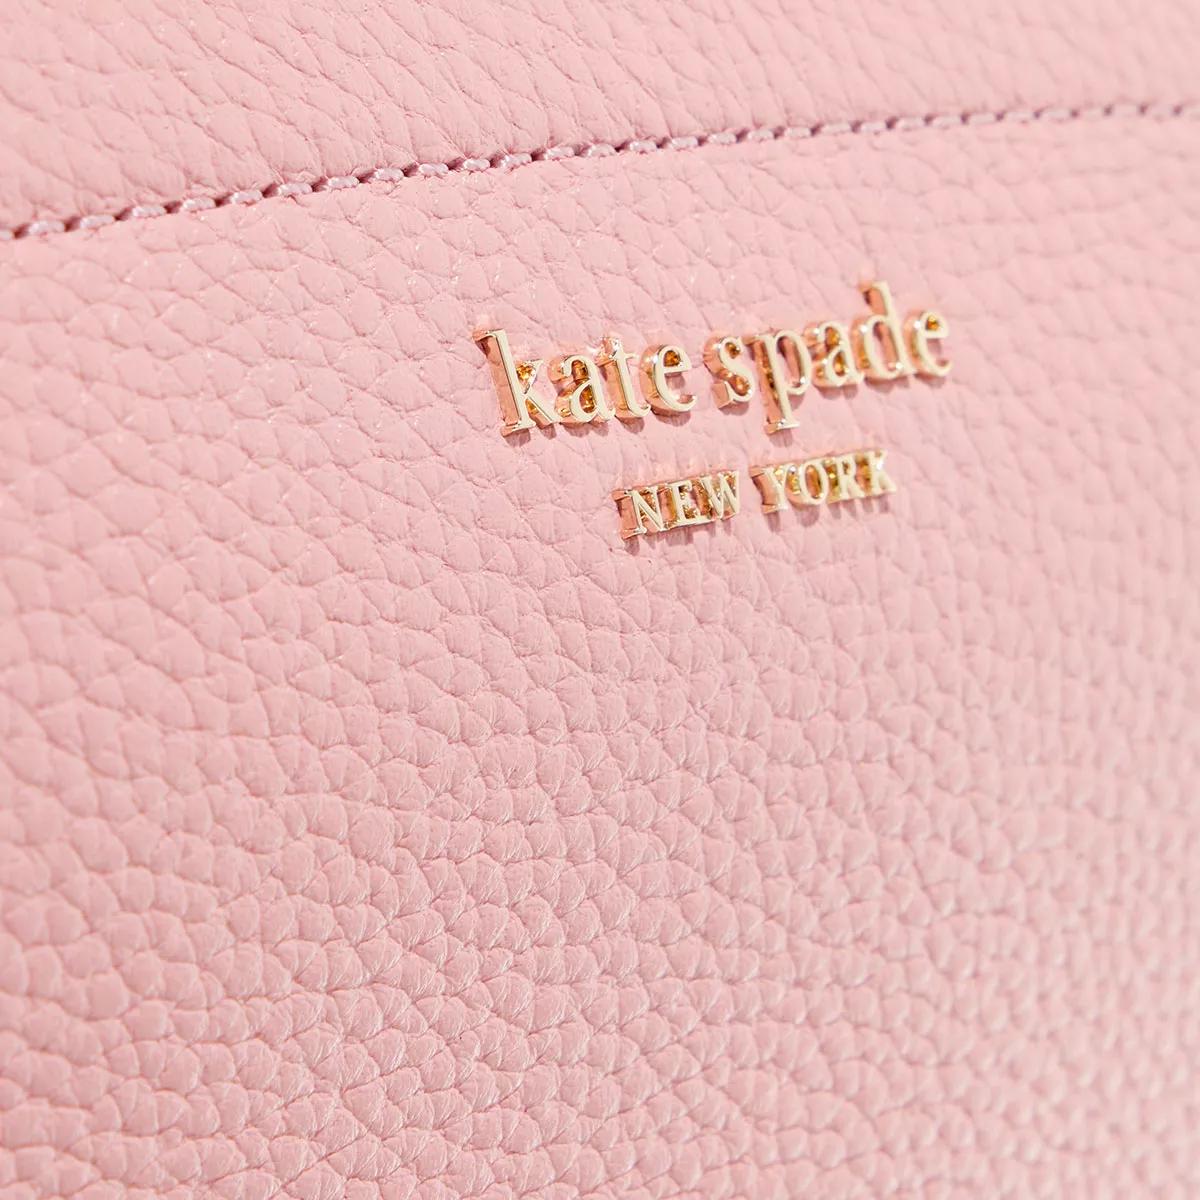 Kate Spade New York Women's Crossbody Bags - Pink